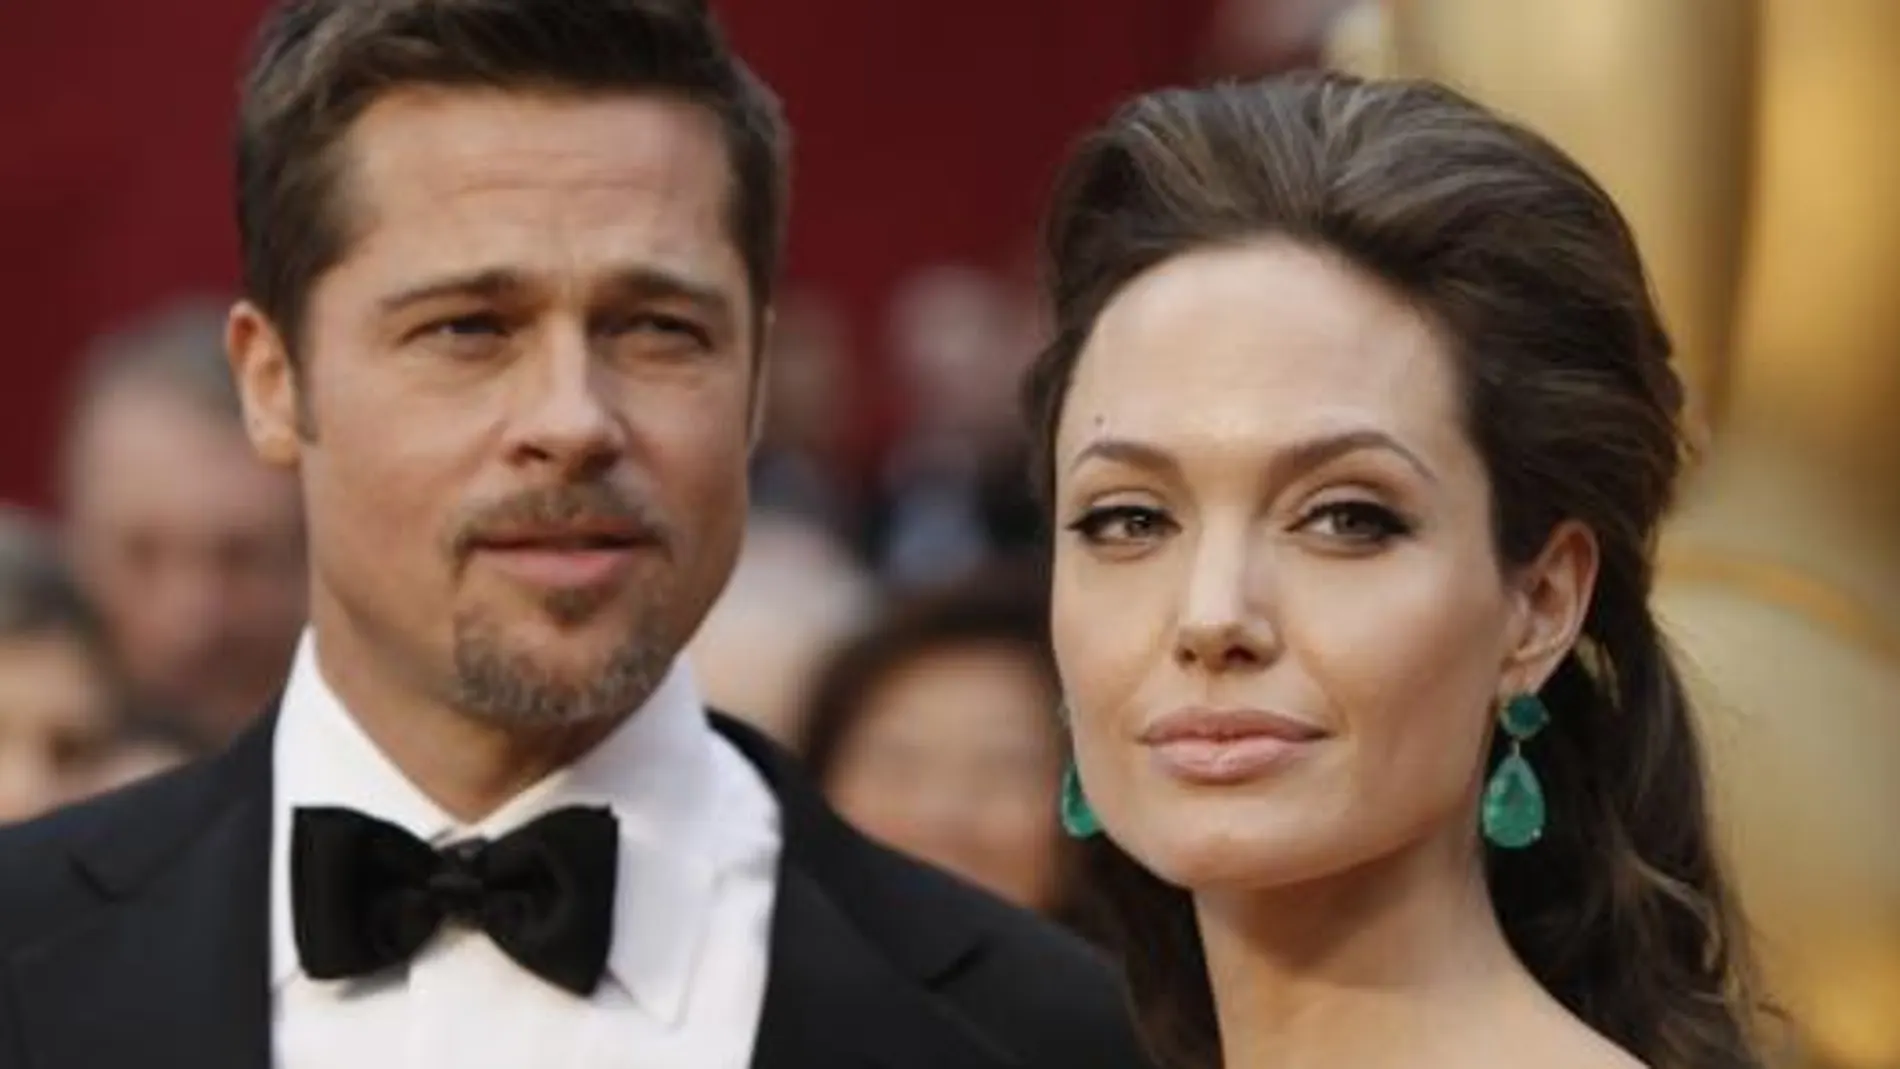 Brad Pitt da un ultimátum a Angelina